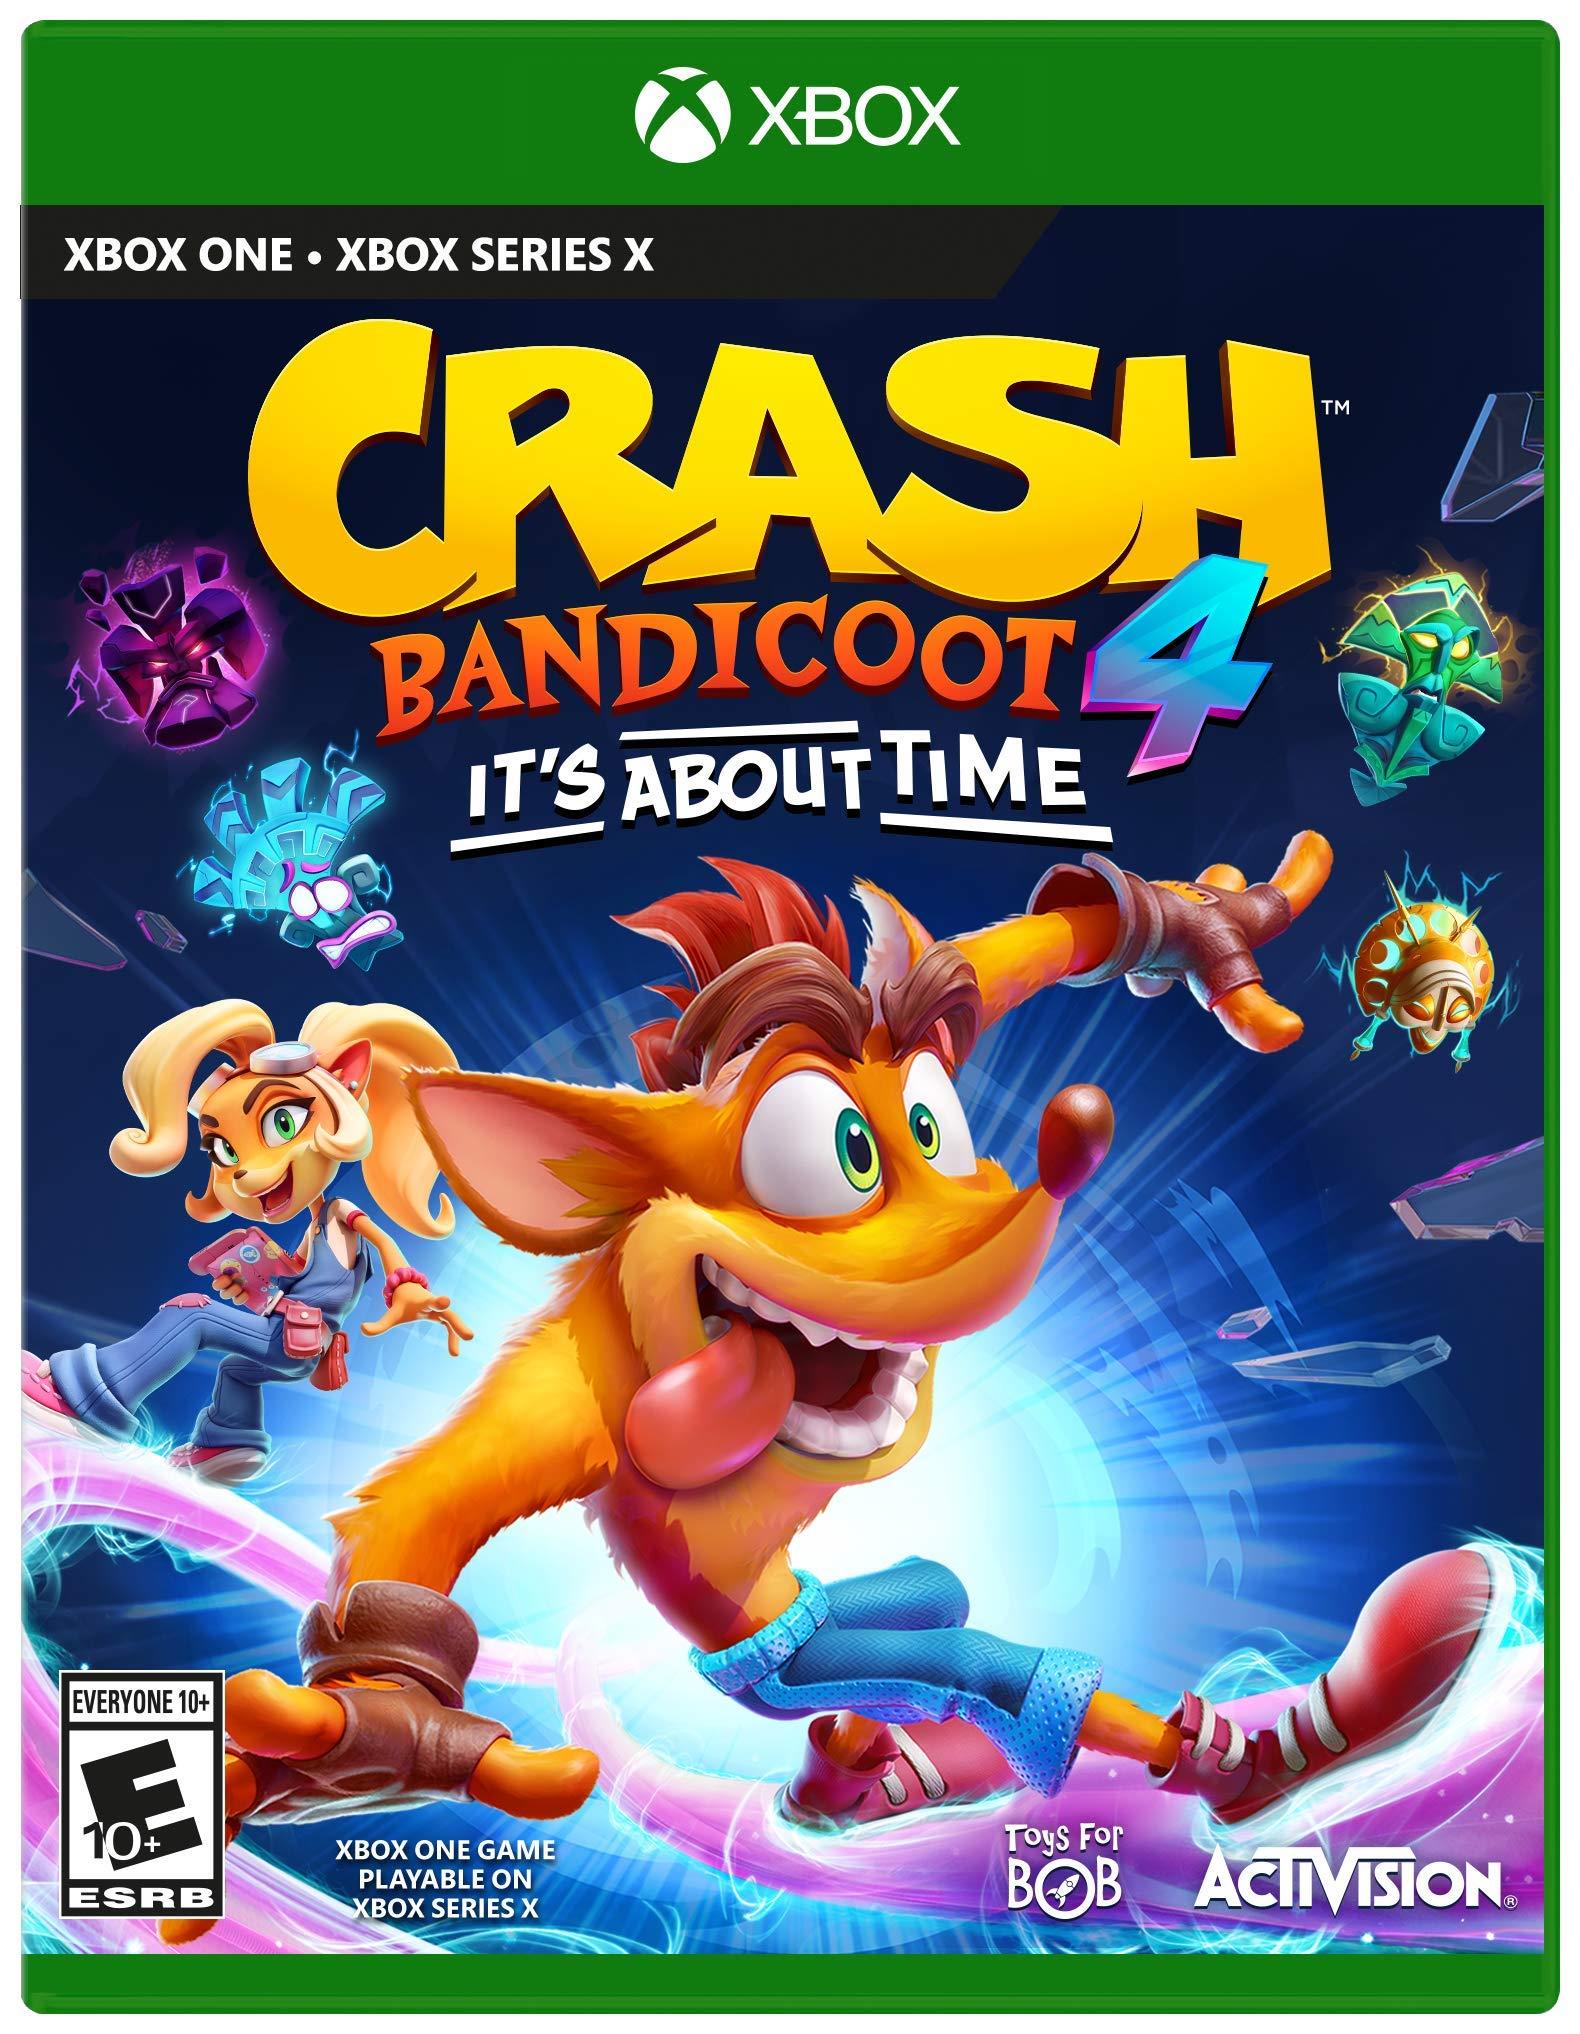 Crash-Bandicoot-4-Its-About-Time-artwork-001.jpg